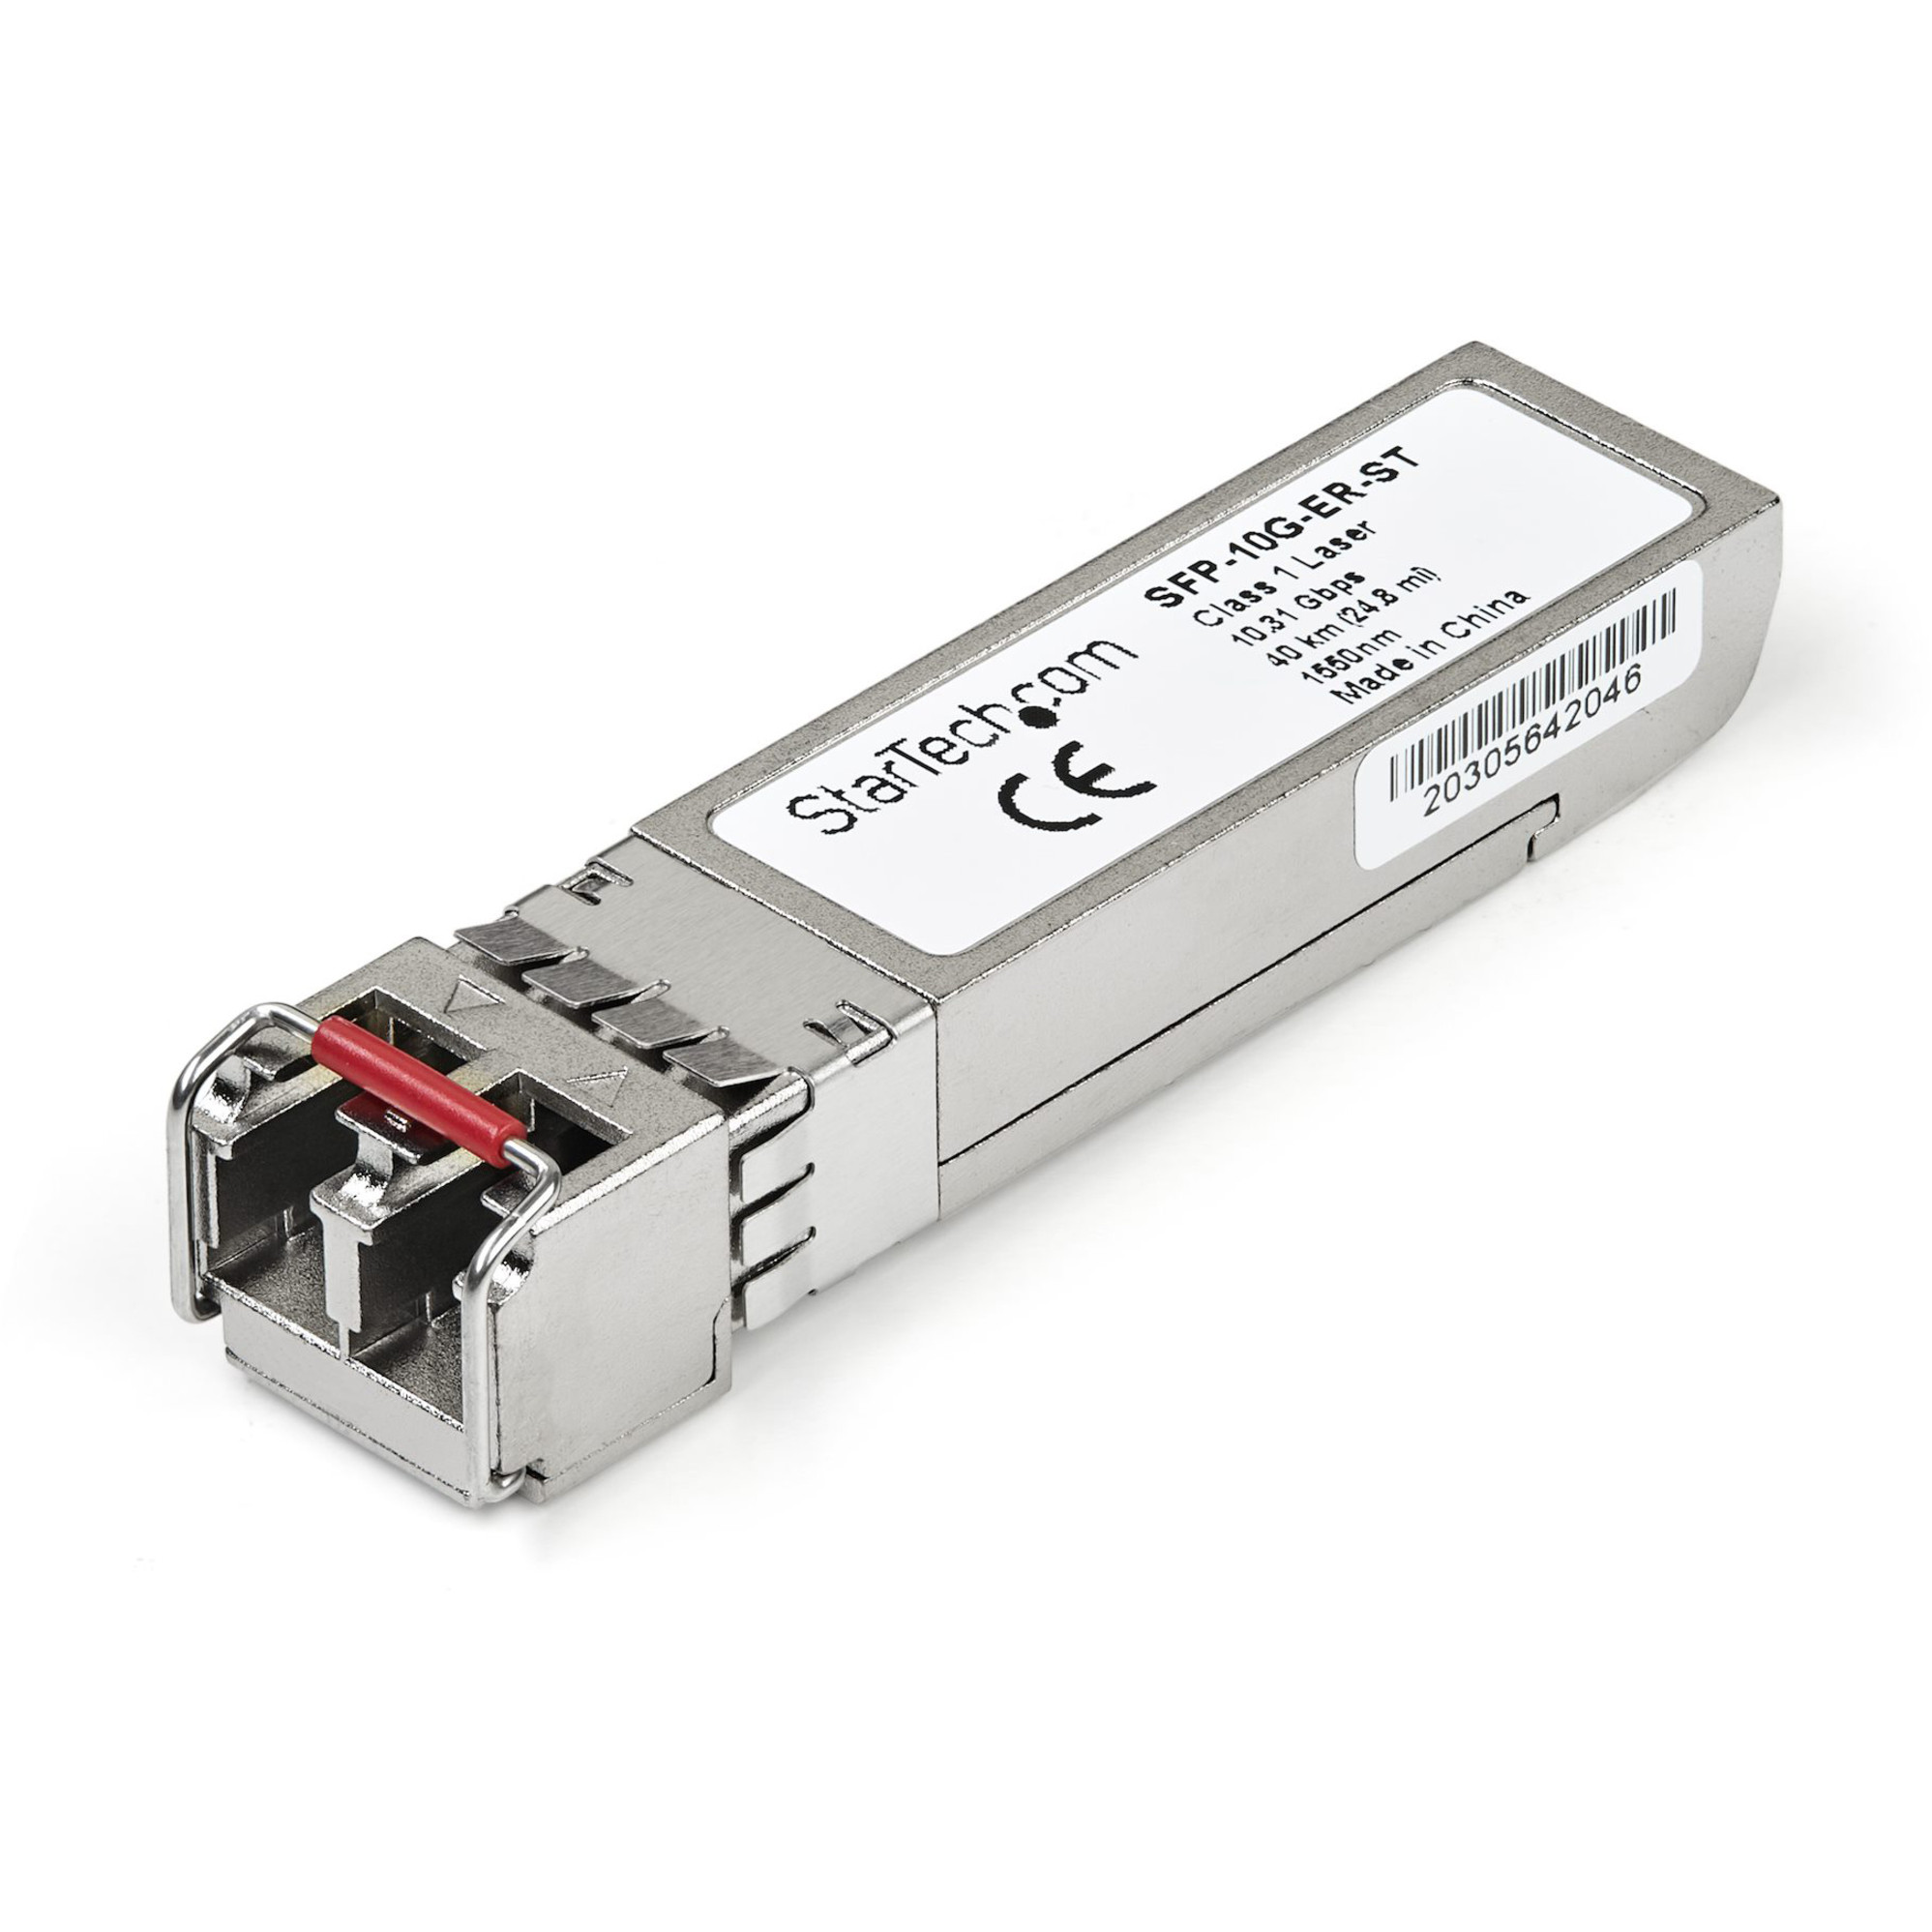 Startech .com Cisco SFP-10G-ER Comp. SFP+ Module10GBASE-ER10GE Gigabit Ethernet SFP+ 10GbE Single Mode Fiber SMF Optic Transceiver -… SFP-10G-ER-ST